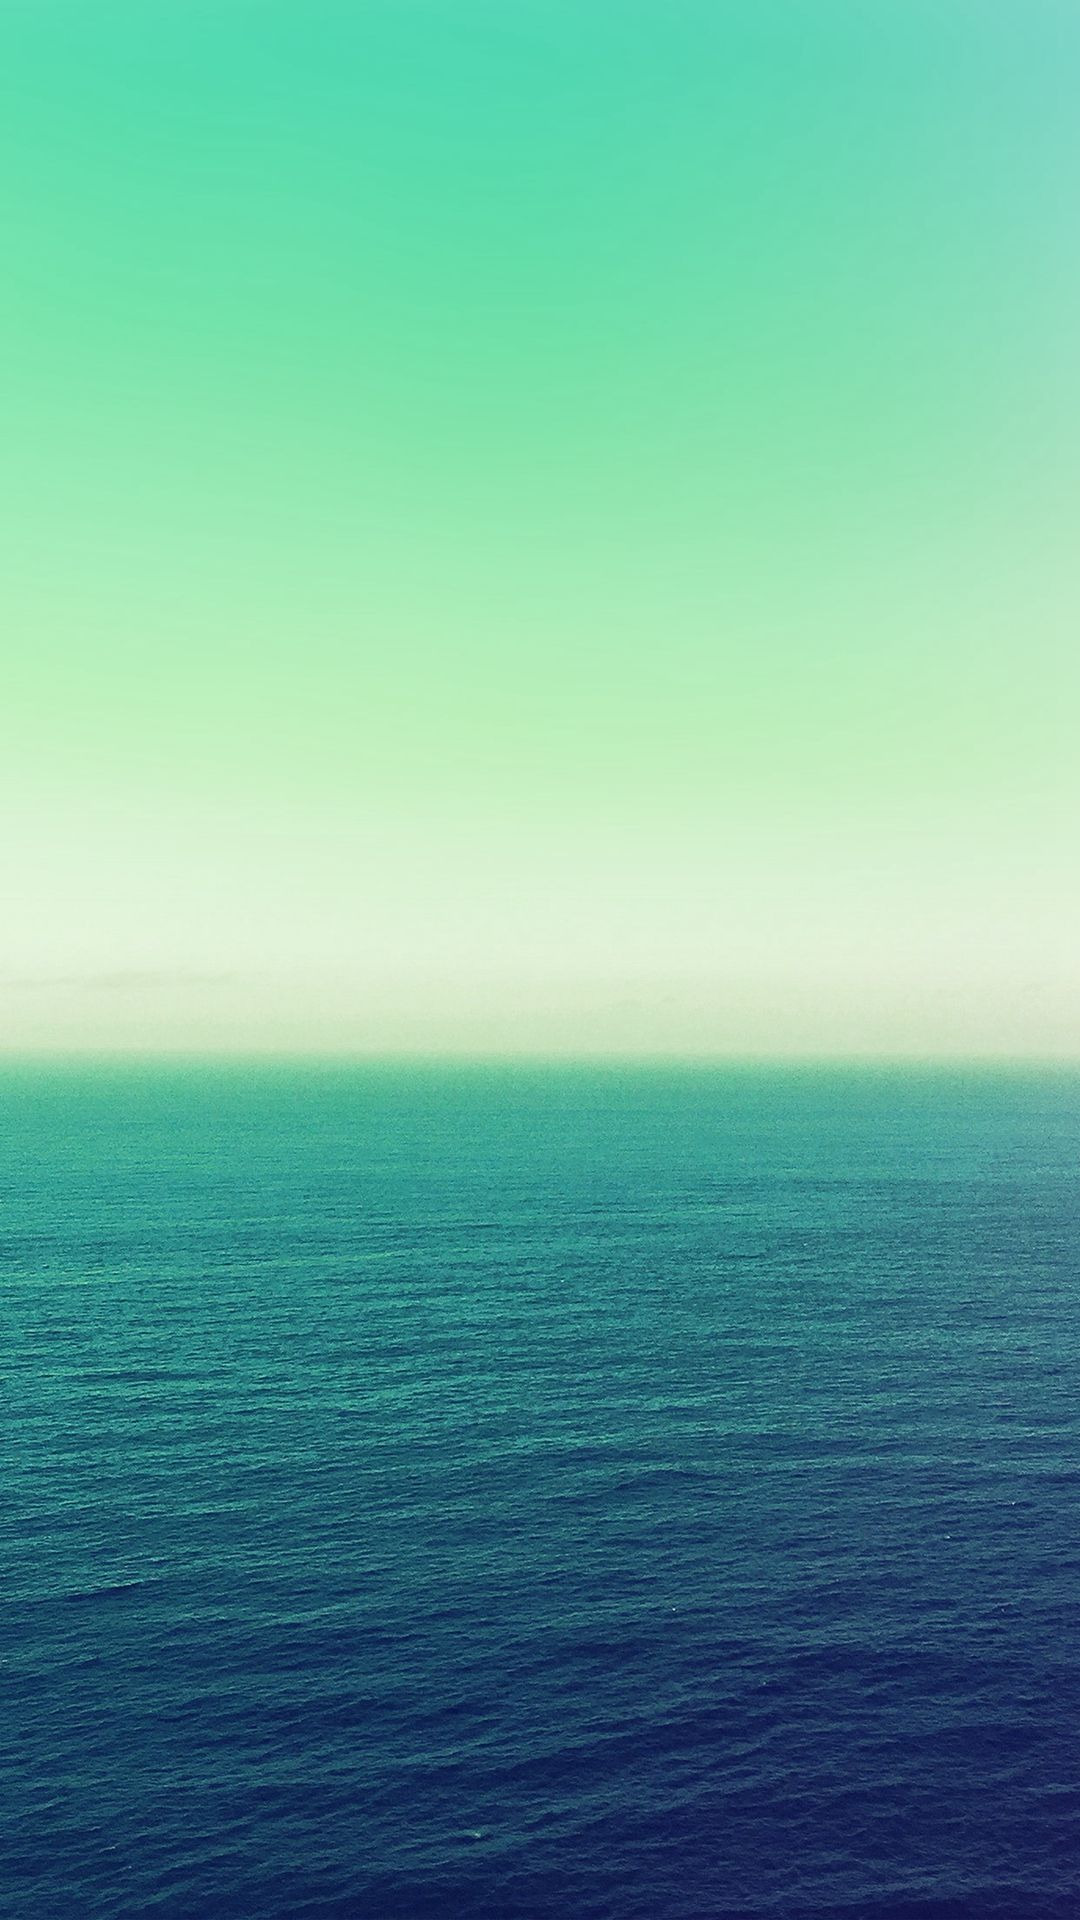 Calm Sea Green Ocean Water Summer Day Nature iPhone 8 Wallpaper